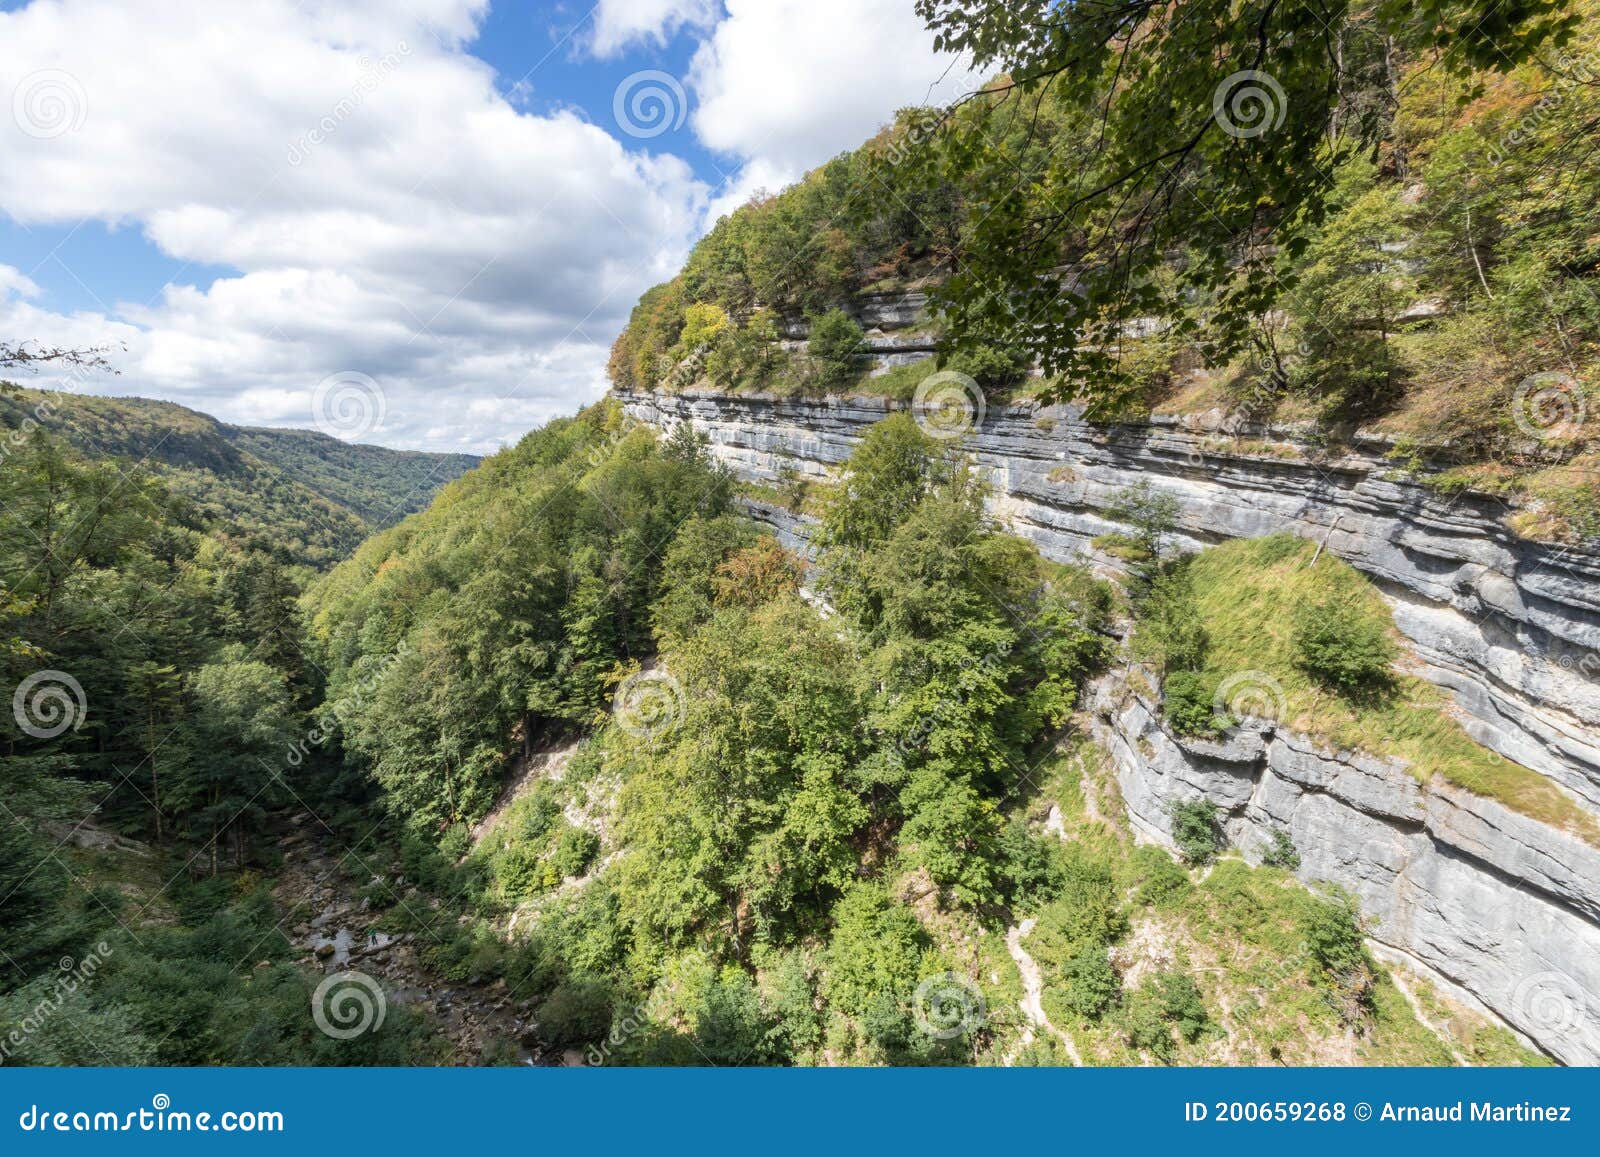 cascades du herisson, waterfalls of the herisson in the jura france